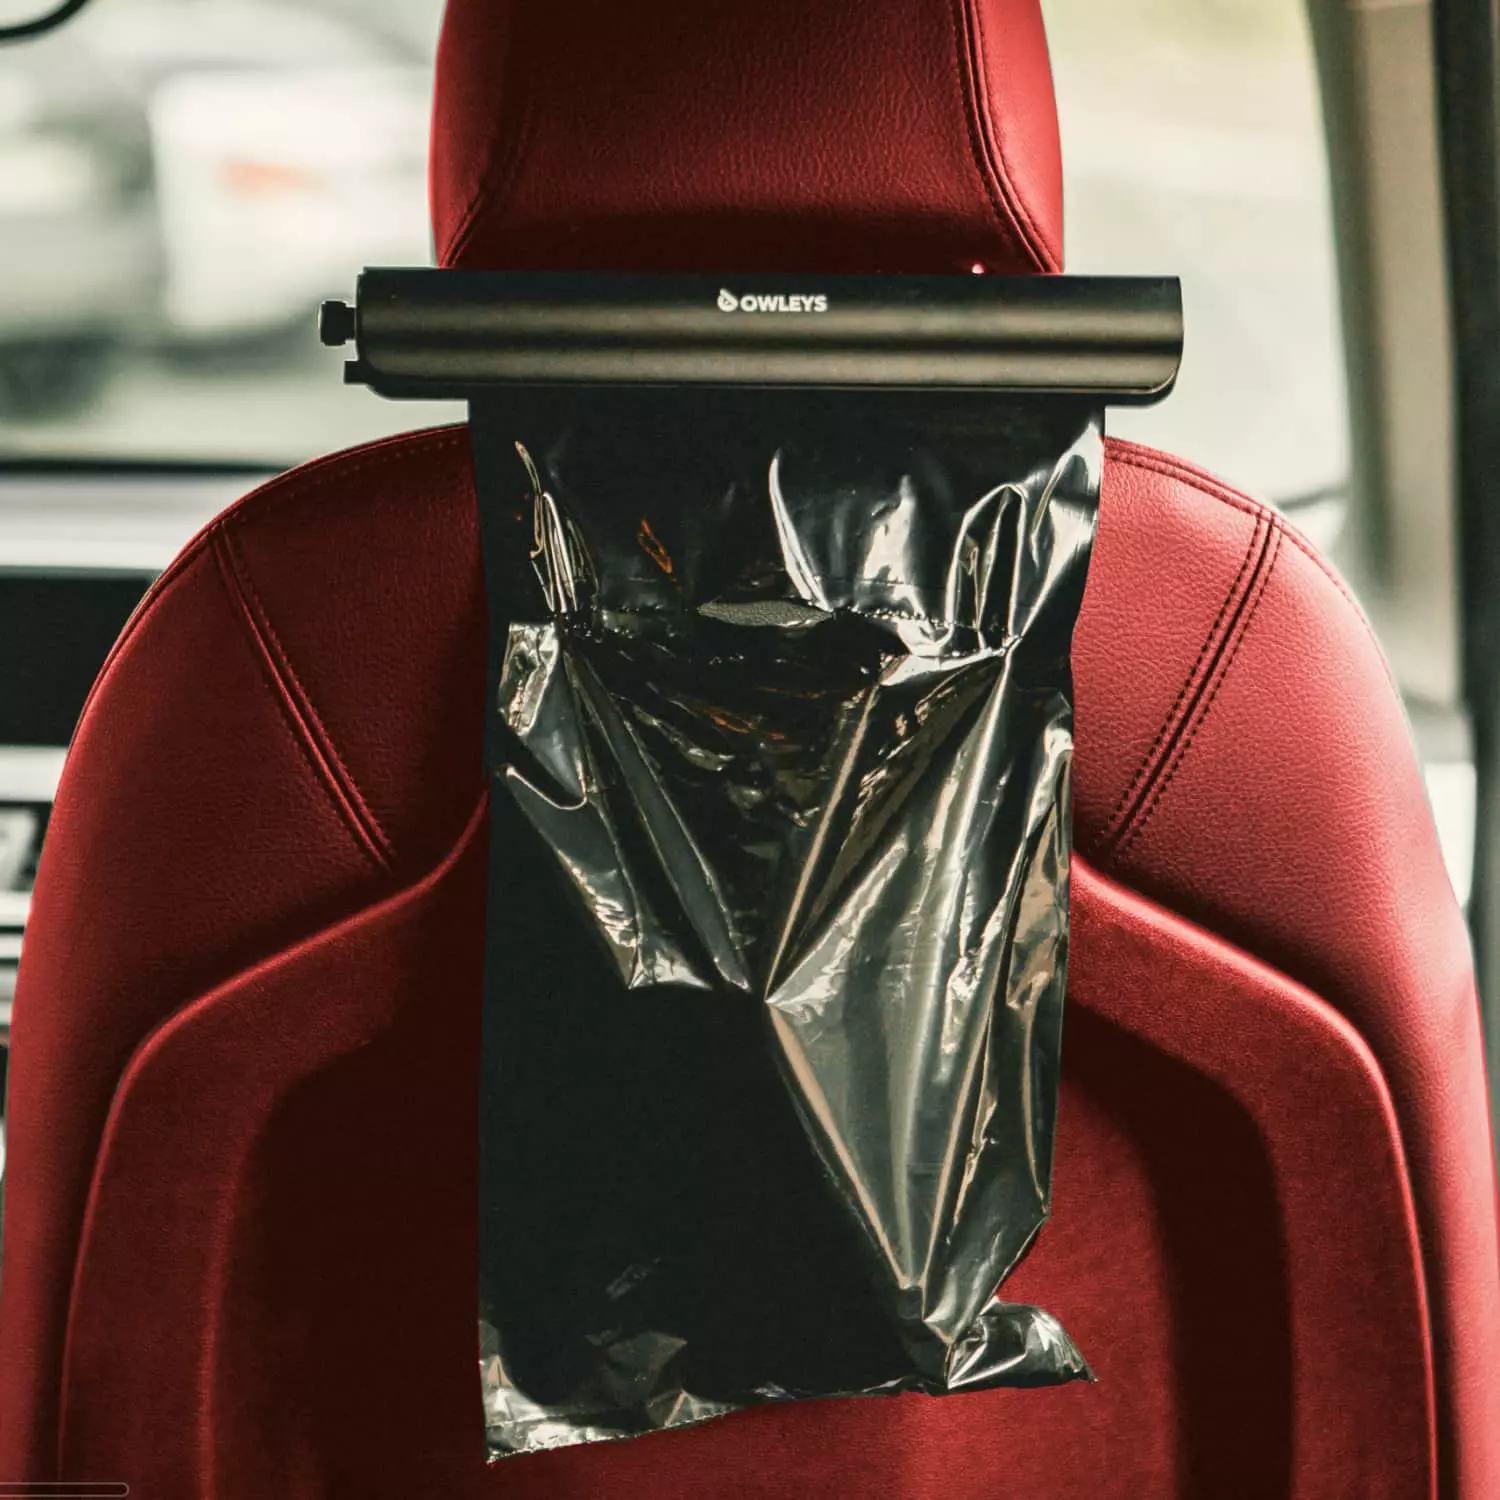 Portable Car Seat Back Garbage Bag Car Auto Trash Can Leak-proof